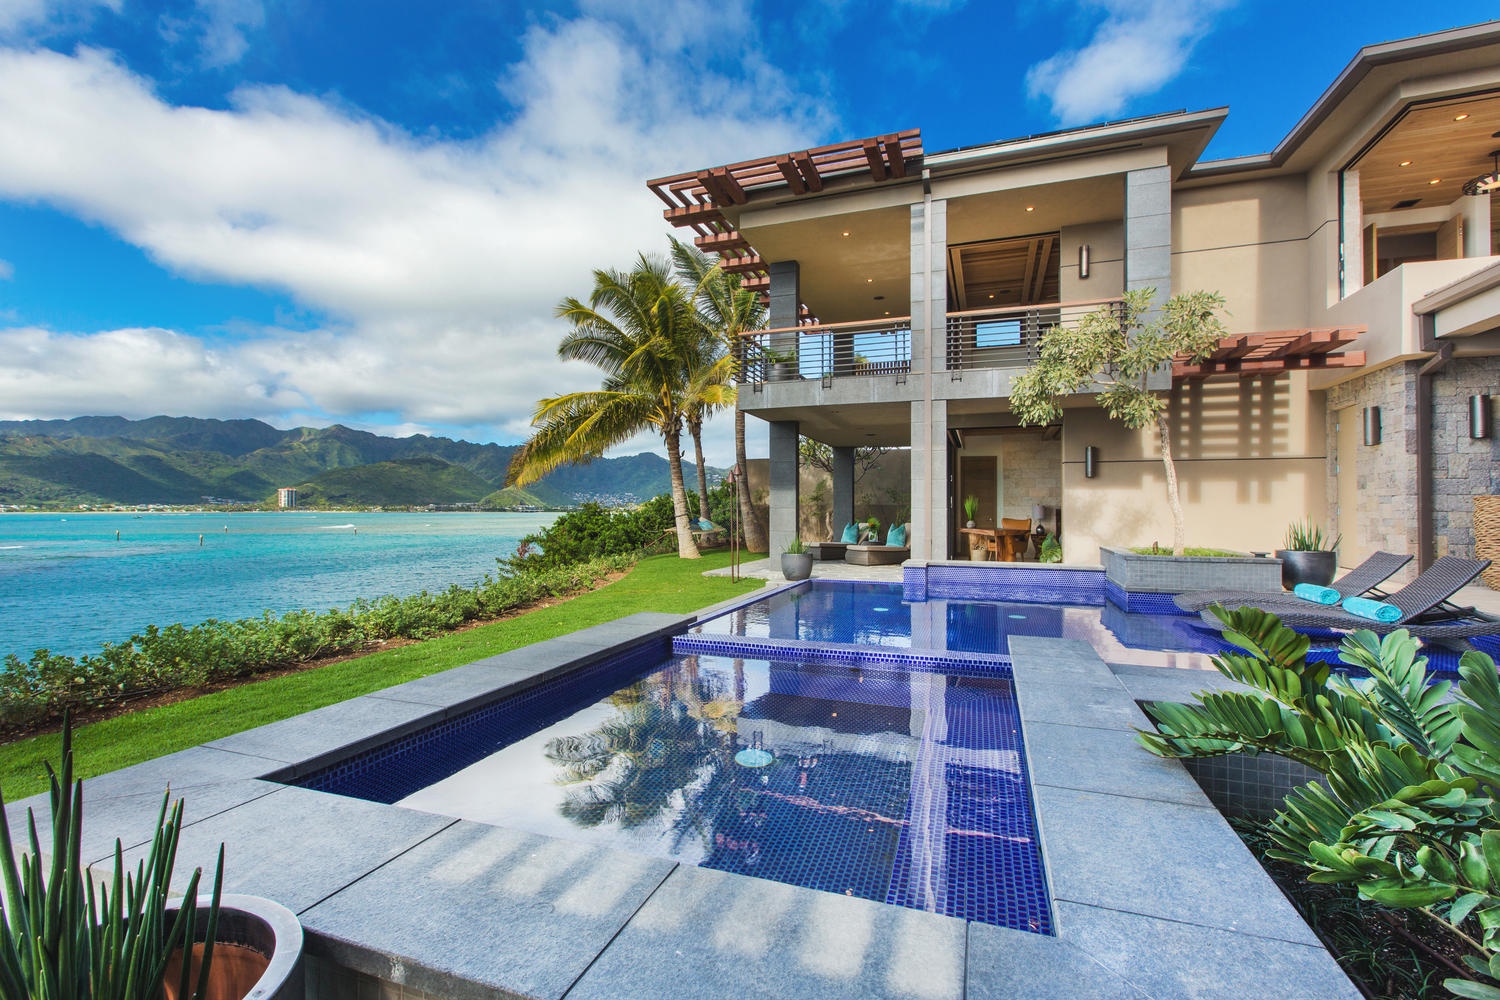 Honolulu Vacation Rentals, Ocean House 4 Bedroom - Infinity pool and jacuzzi